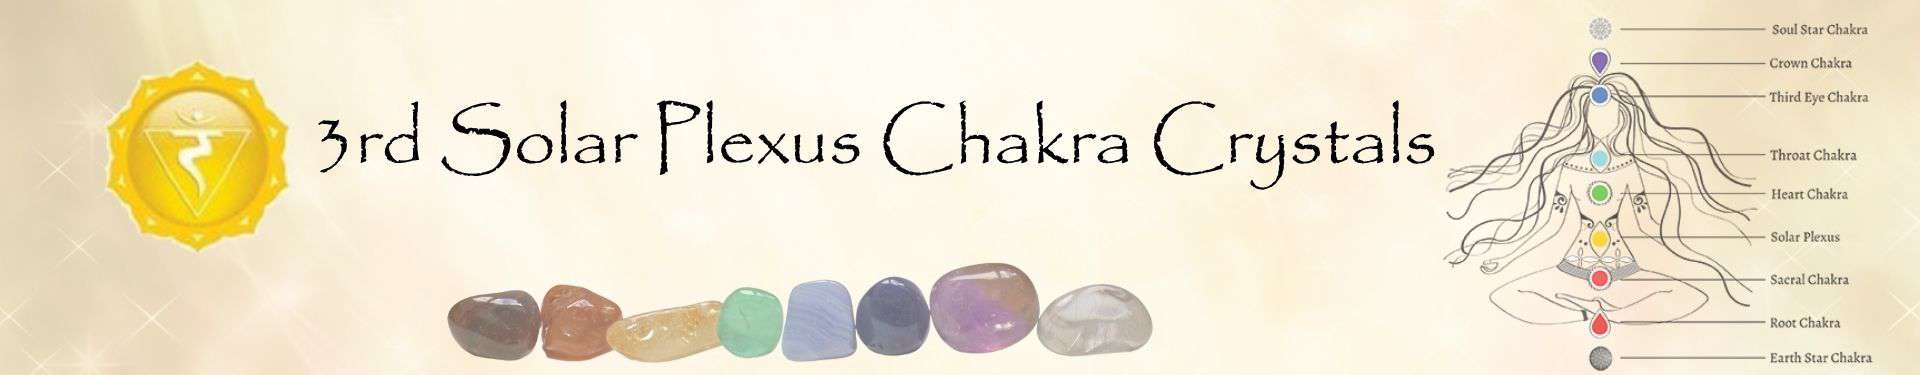 Solar Plexus Chakra Banner